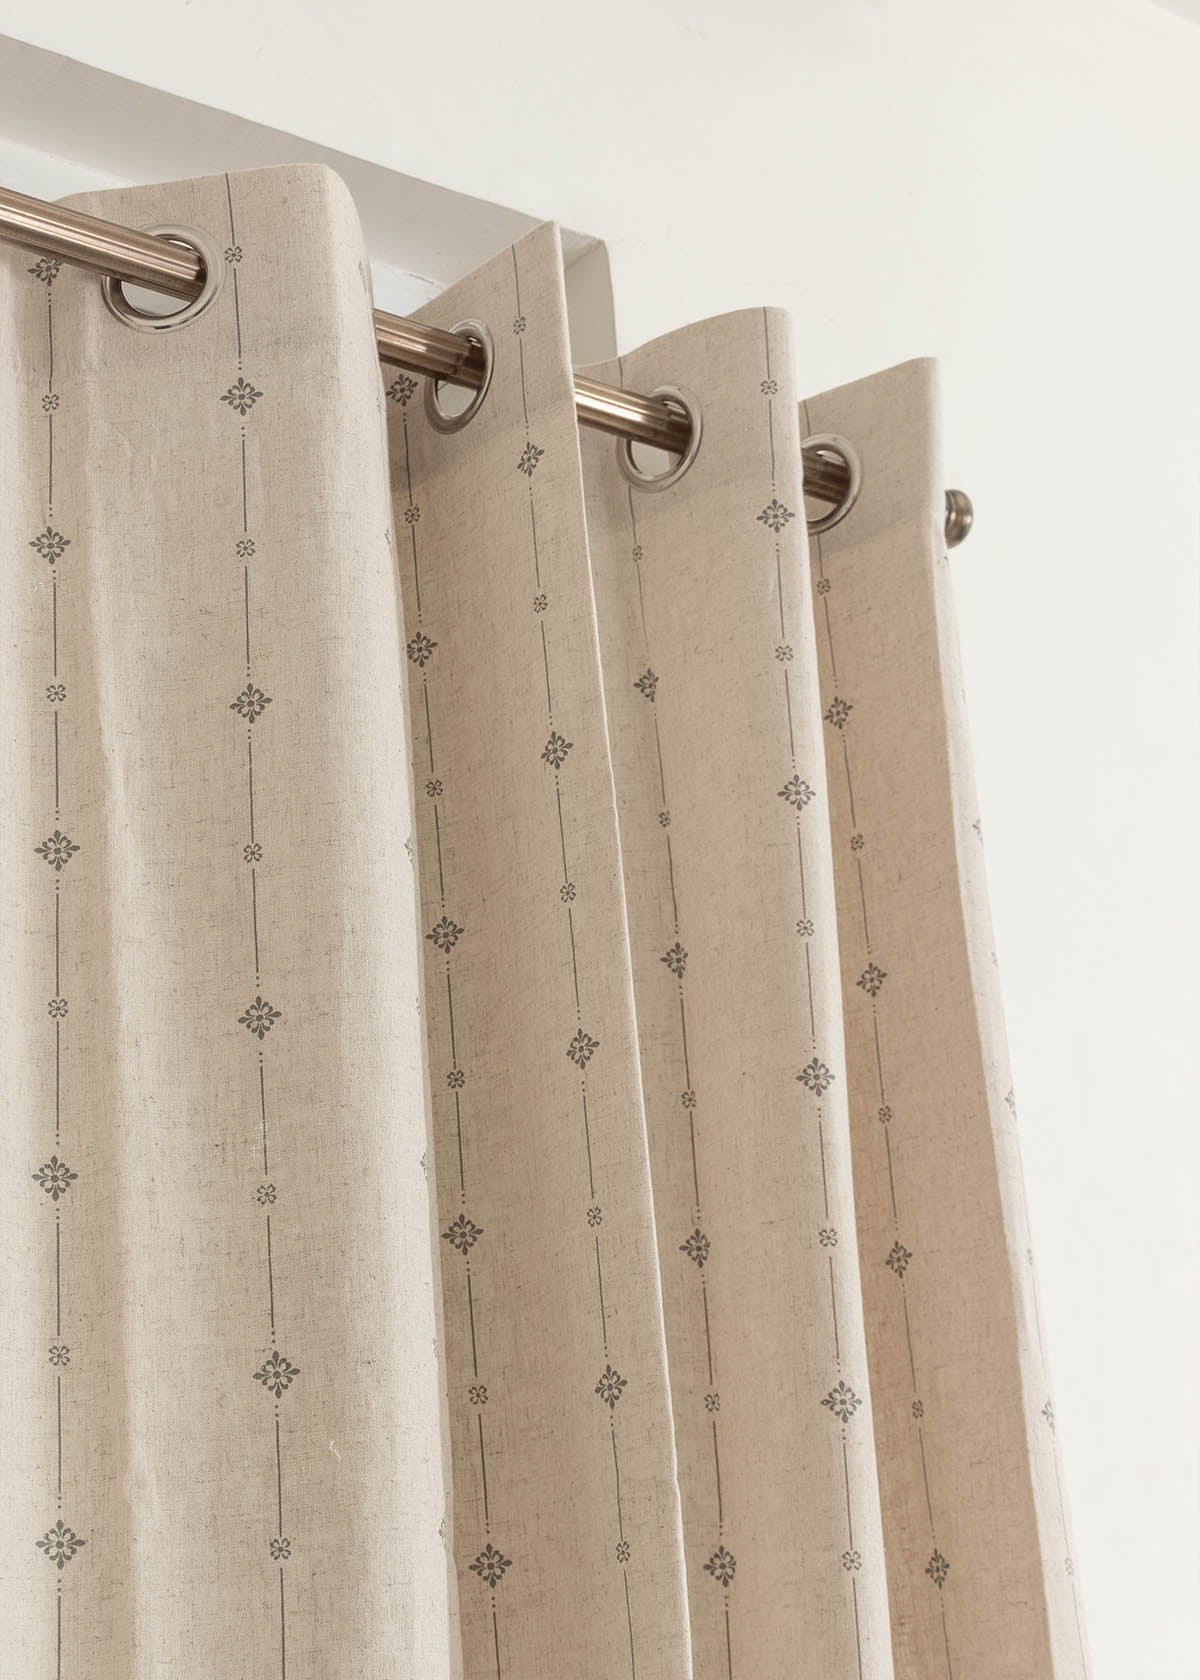 Tulsi linen 100% Customizable Cotton ethnic curtain for Living room & bedroom - Room darkening  - Beige